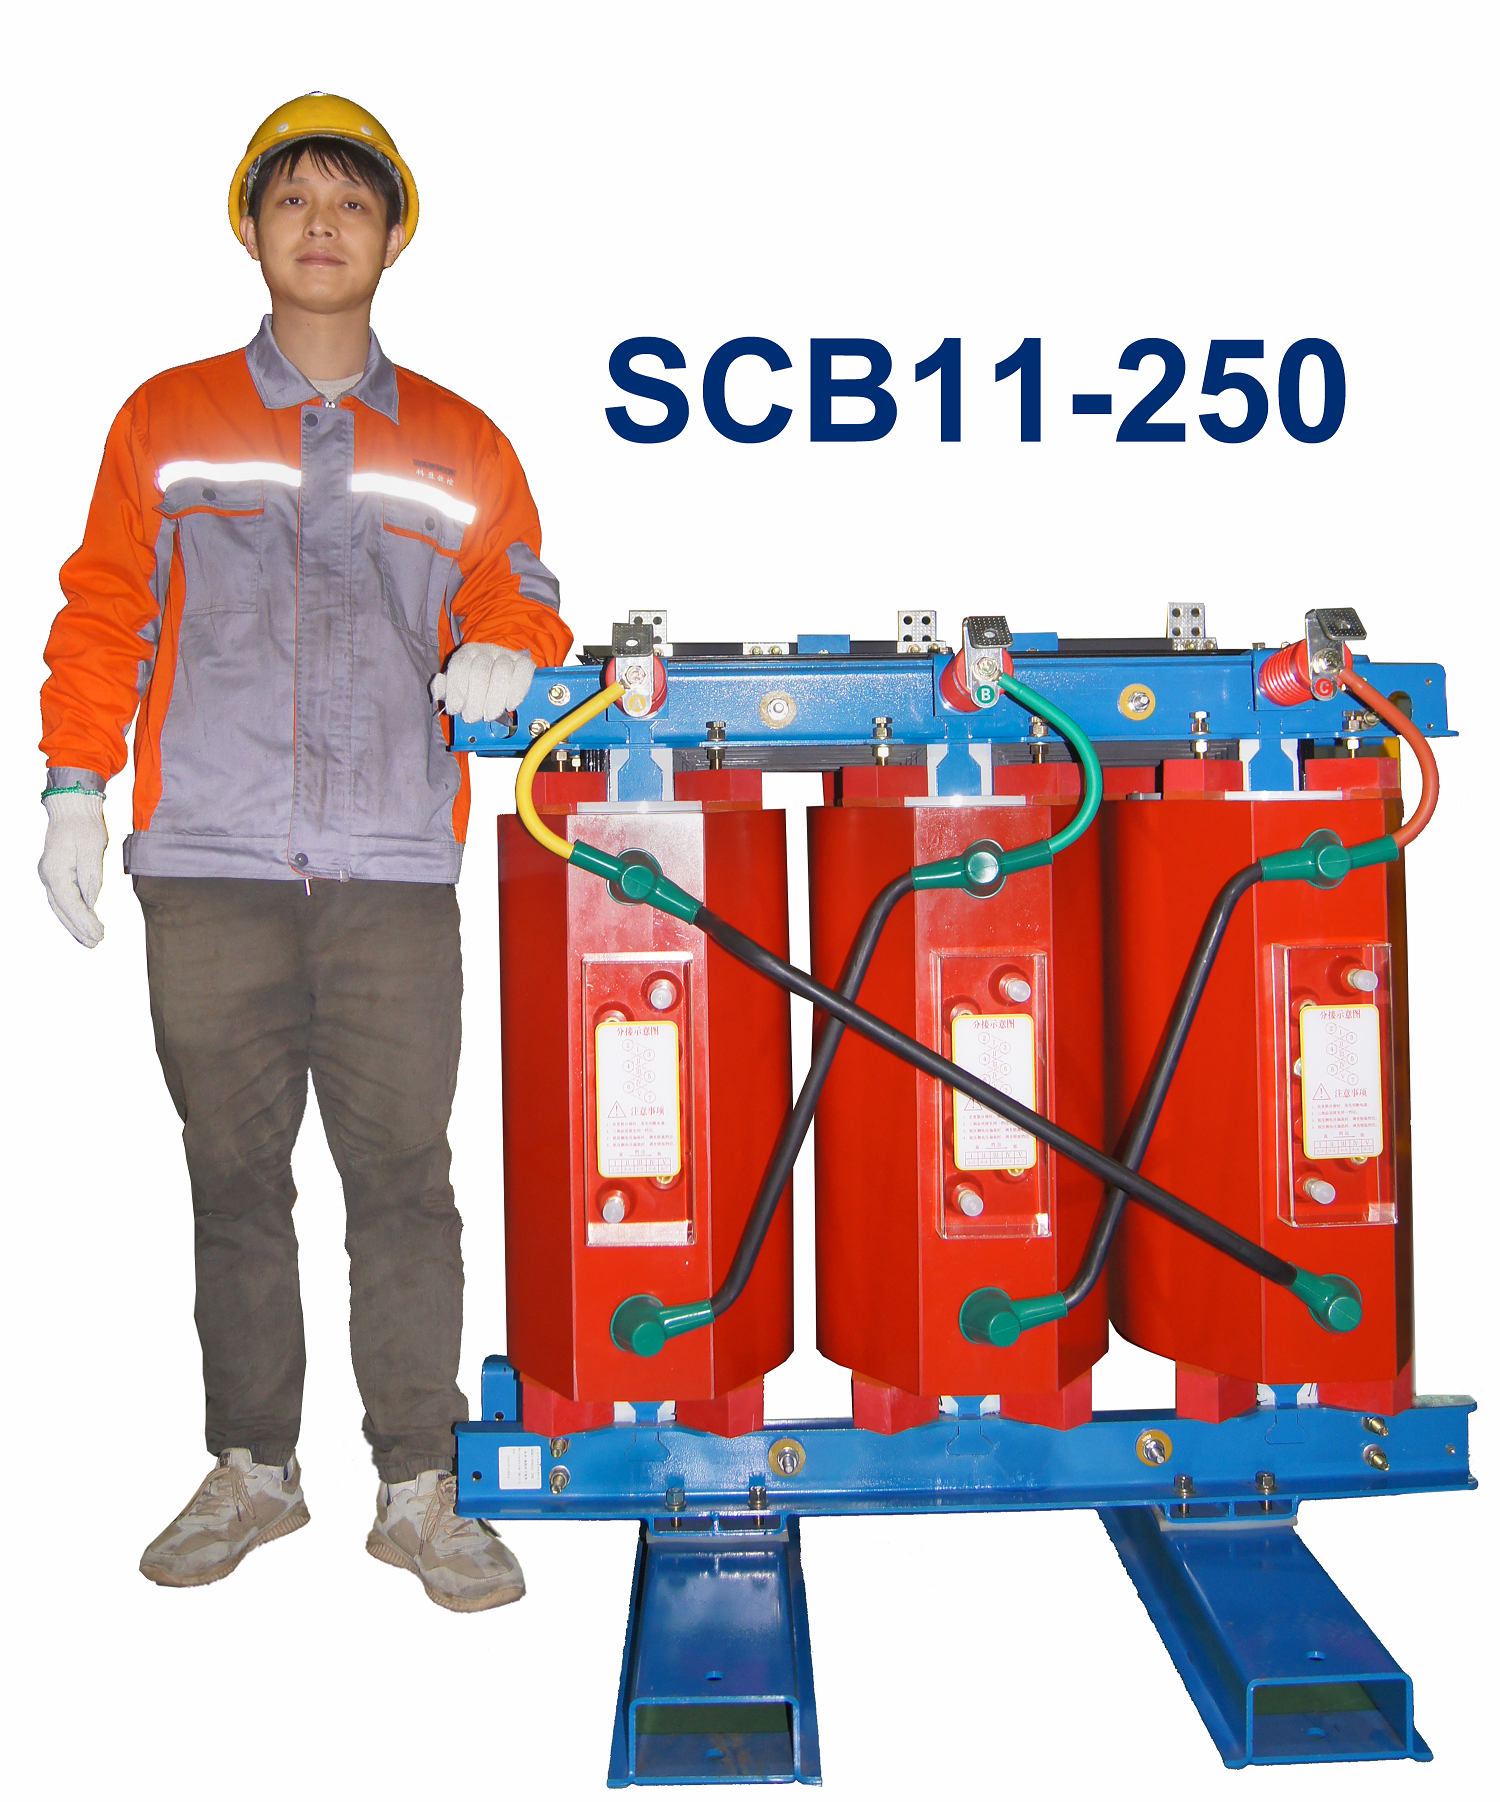 SCB11-250